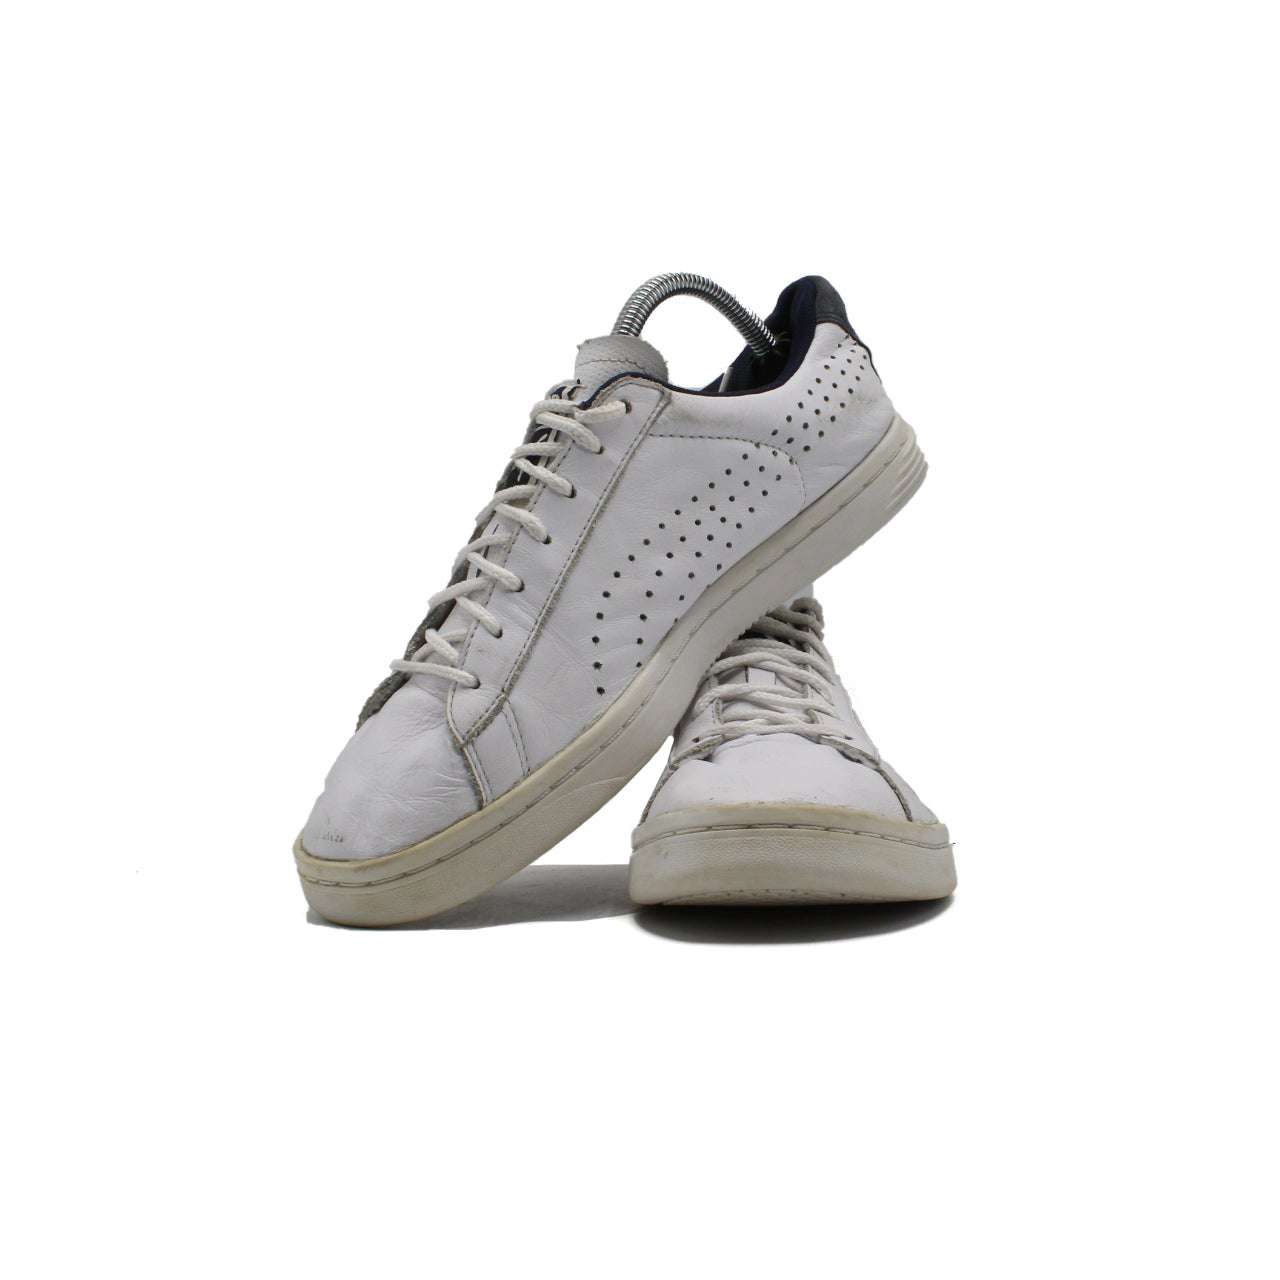 Puma Court Star CRFTD MEN'S Casual Shoe